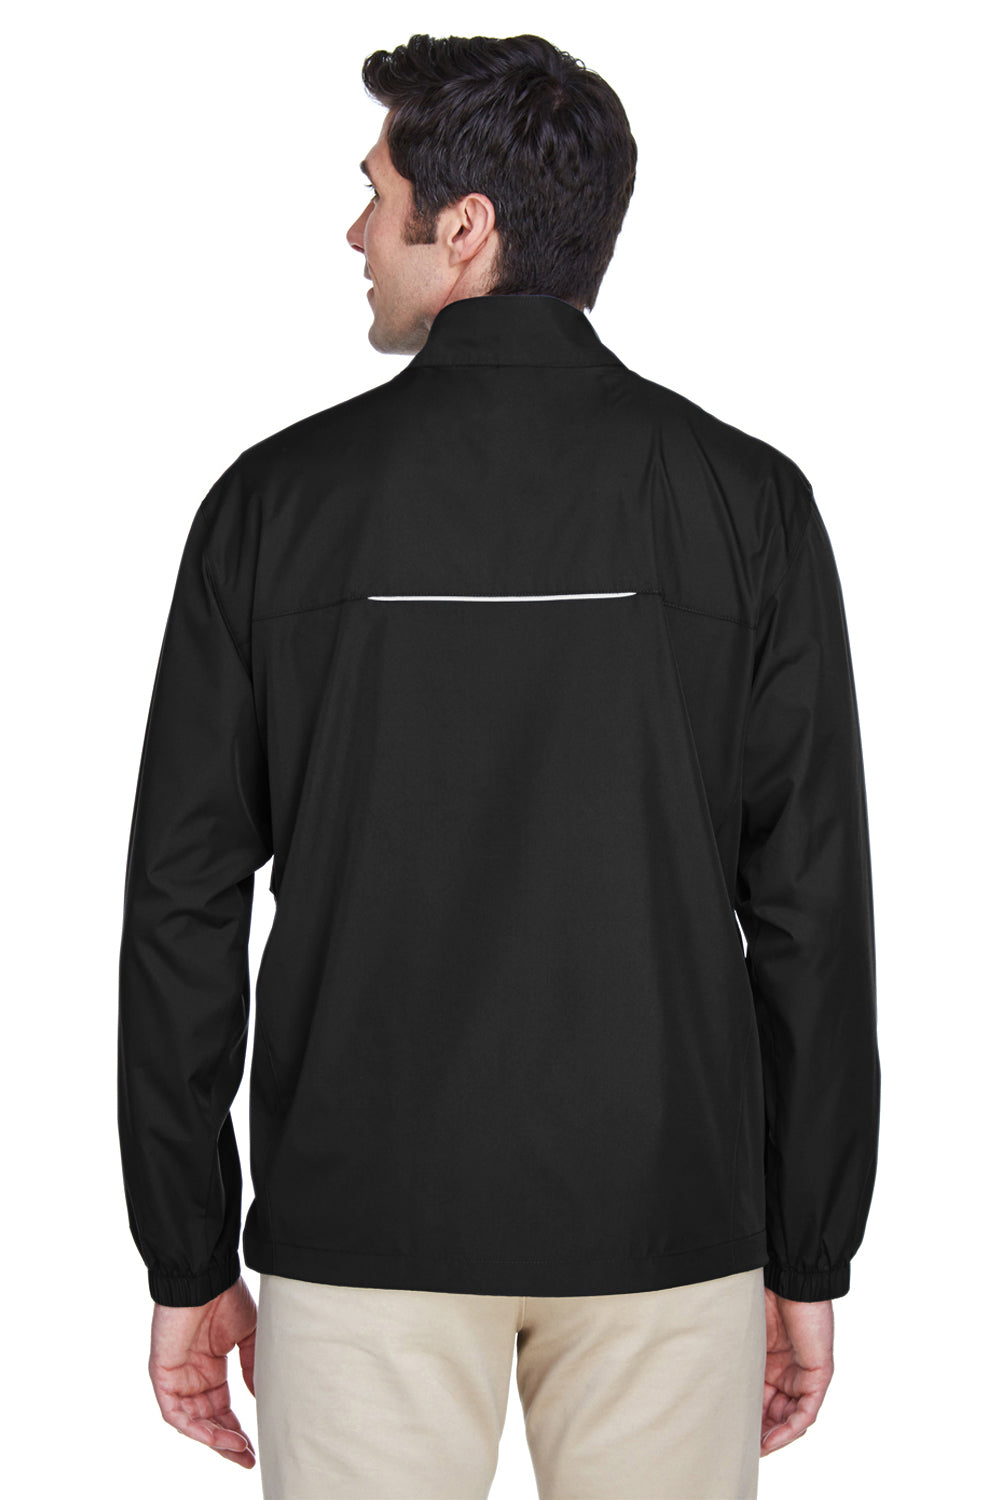 Core 365 88183 Mens Motivate Water Resistant Full Zip Jacket Black Back